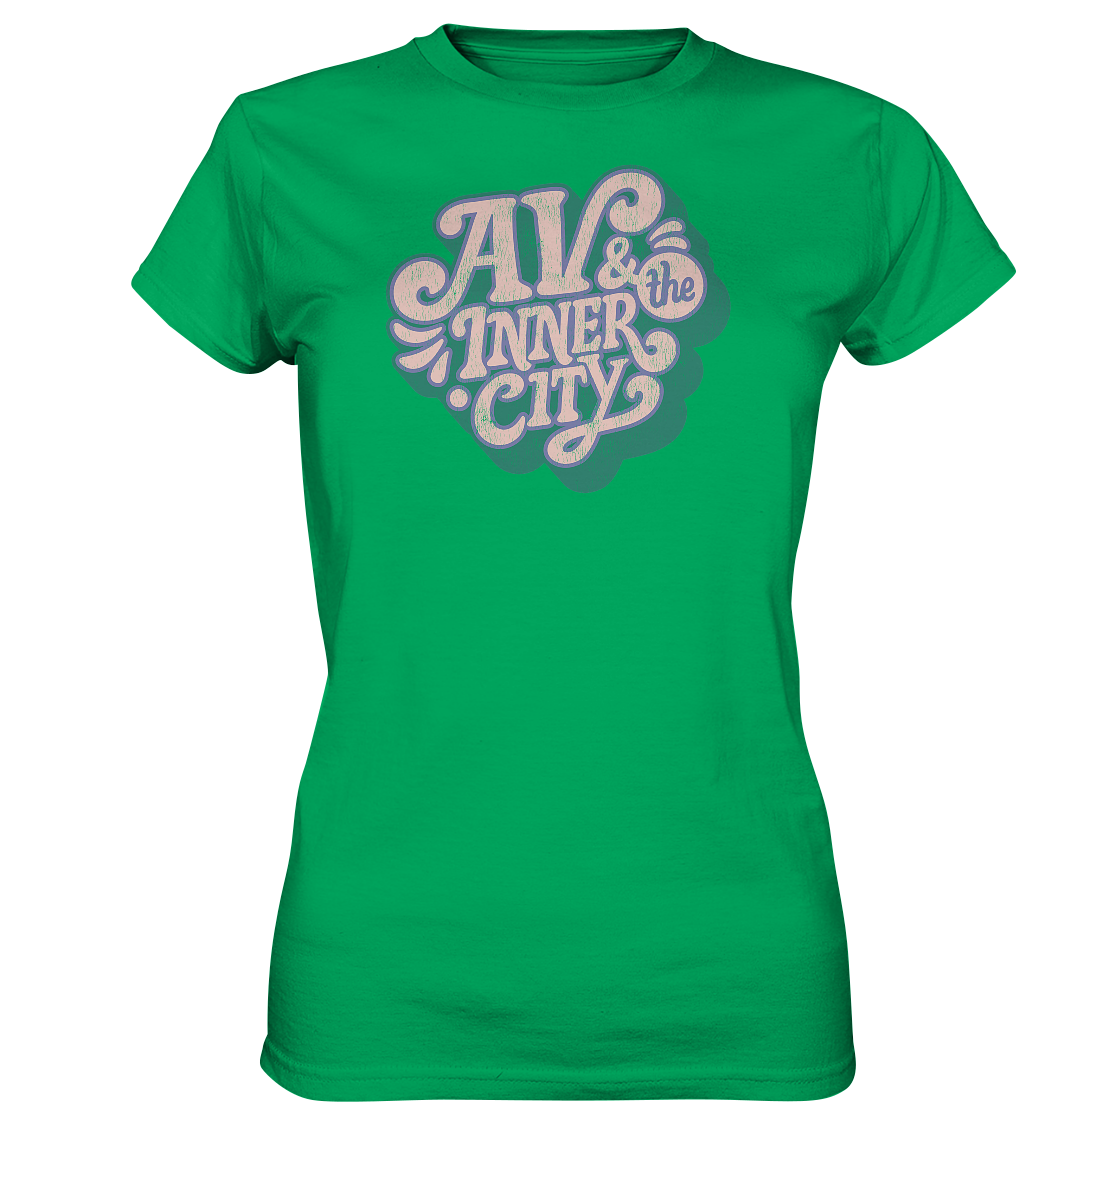 AV & the Inner City / Women's Premium Shirt with Green and Pink Logo